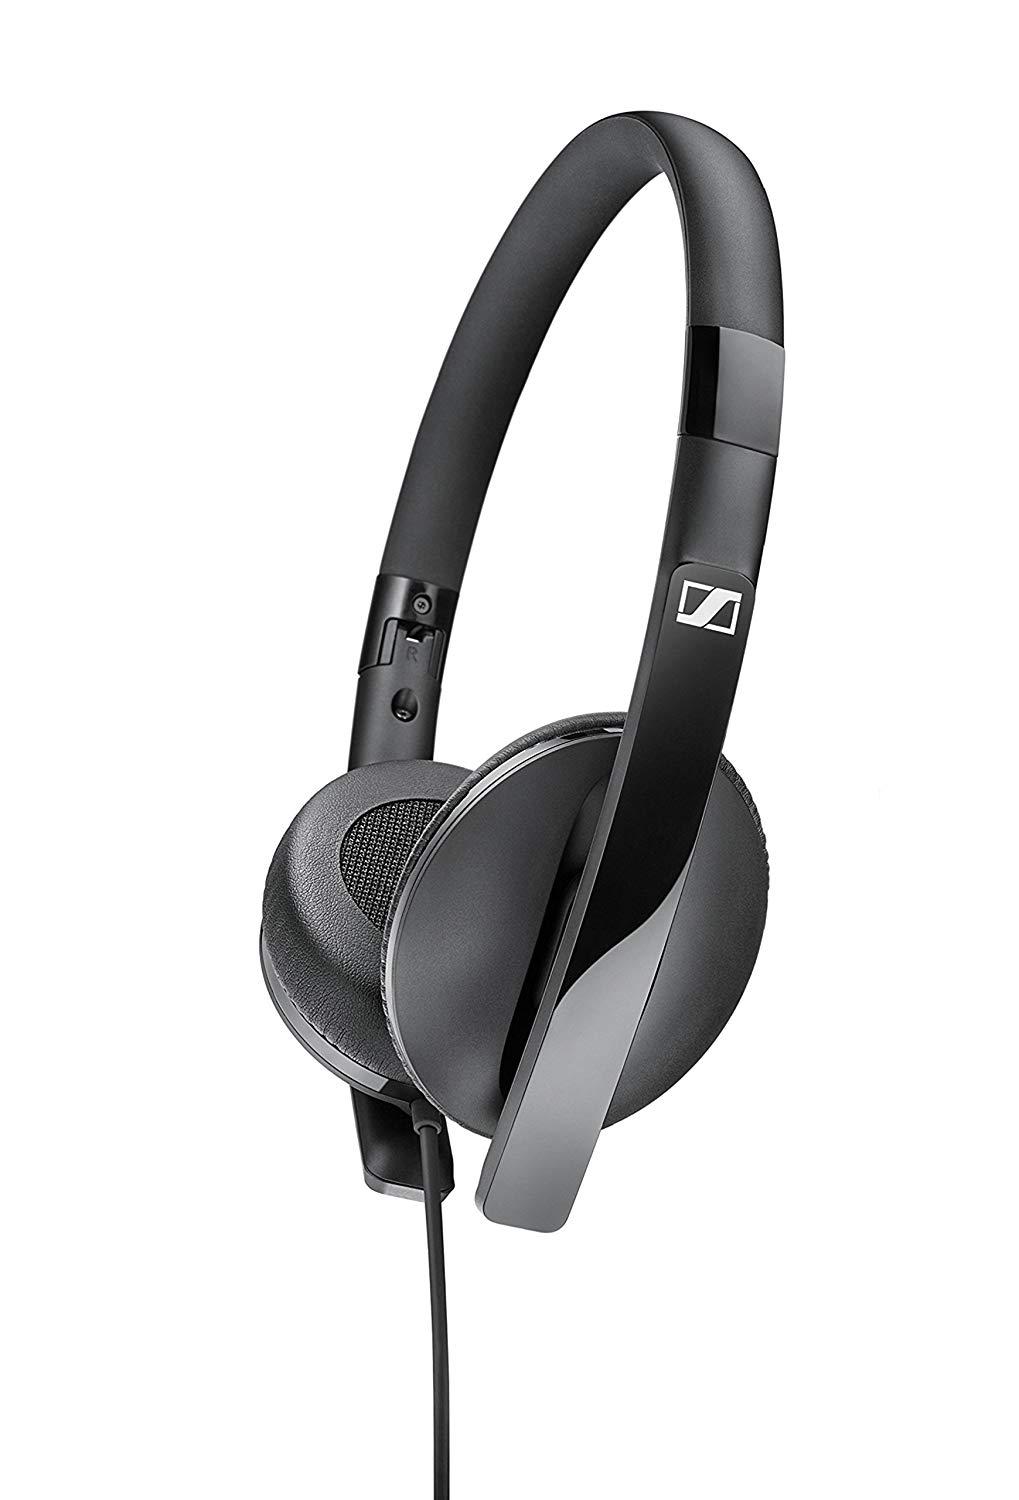 Sennheiser HD 2.20s Ear Headphones (Discontinued by Manufacturer)